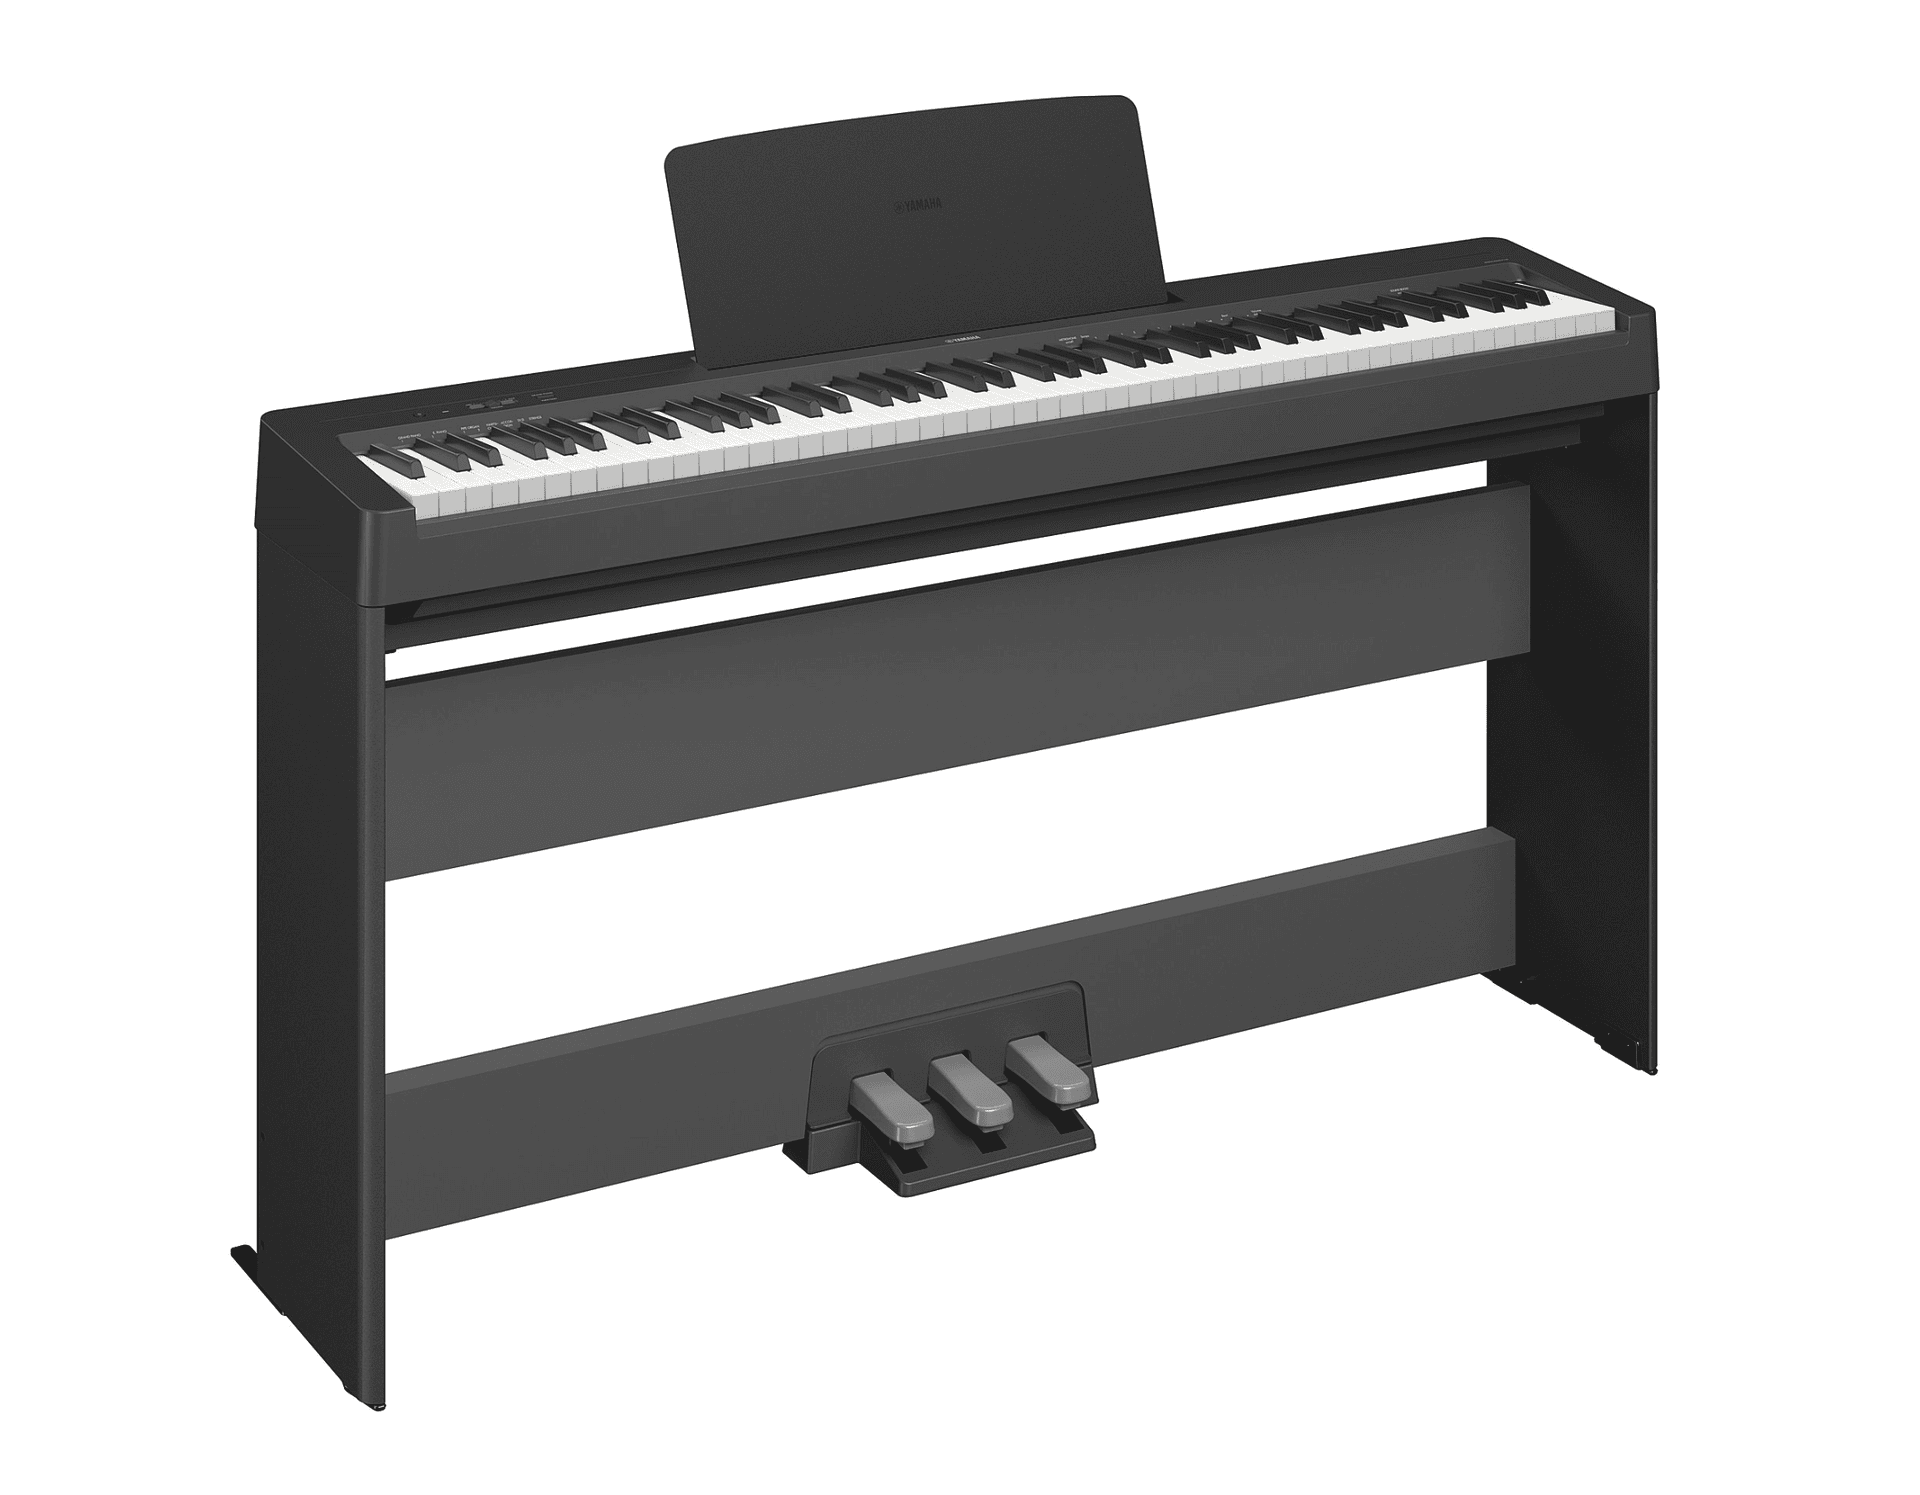 Piano numérique Yamaha P145B